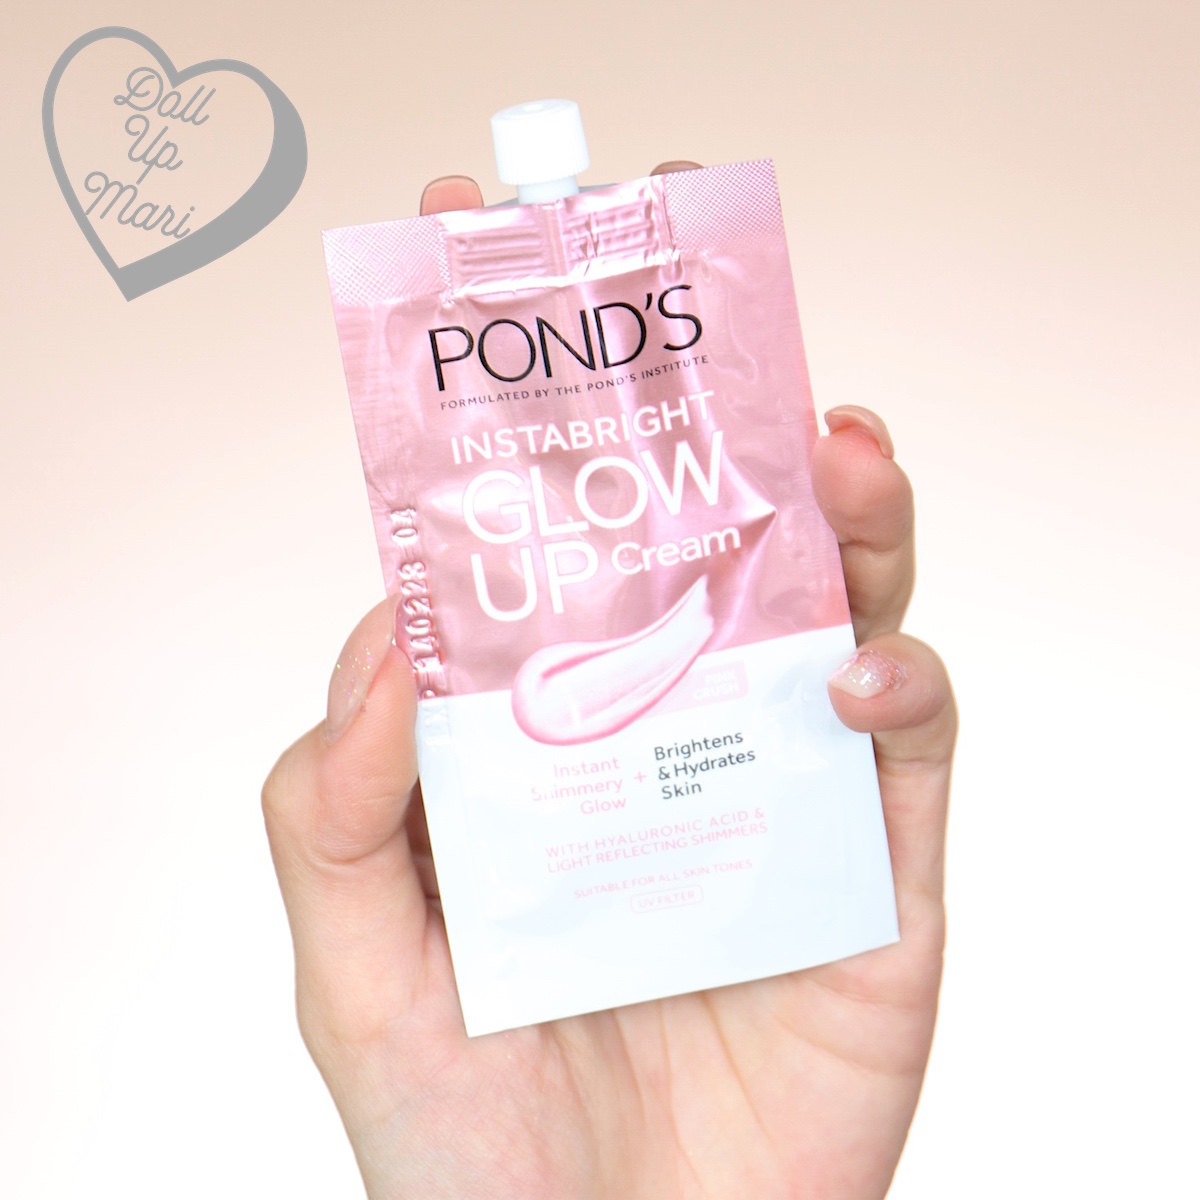 Pond's Instabright Glow Up Cream (Pink Crush)